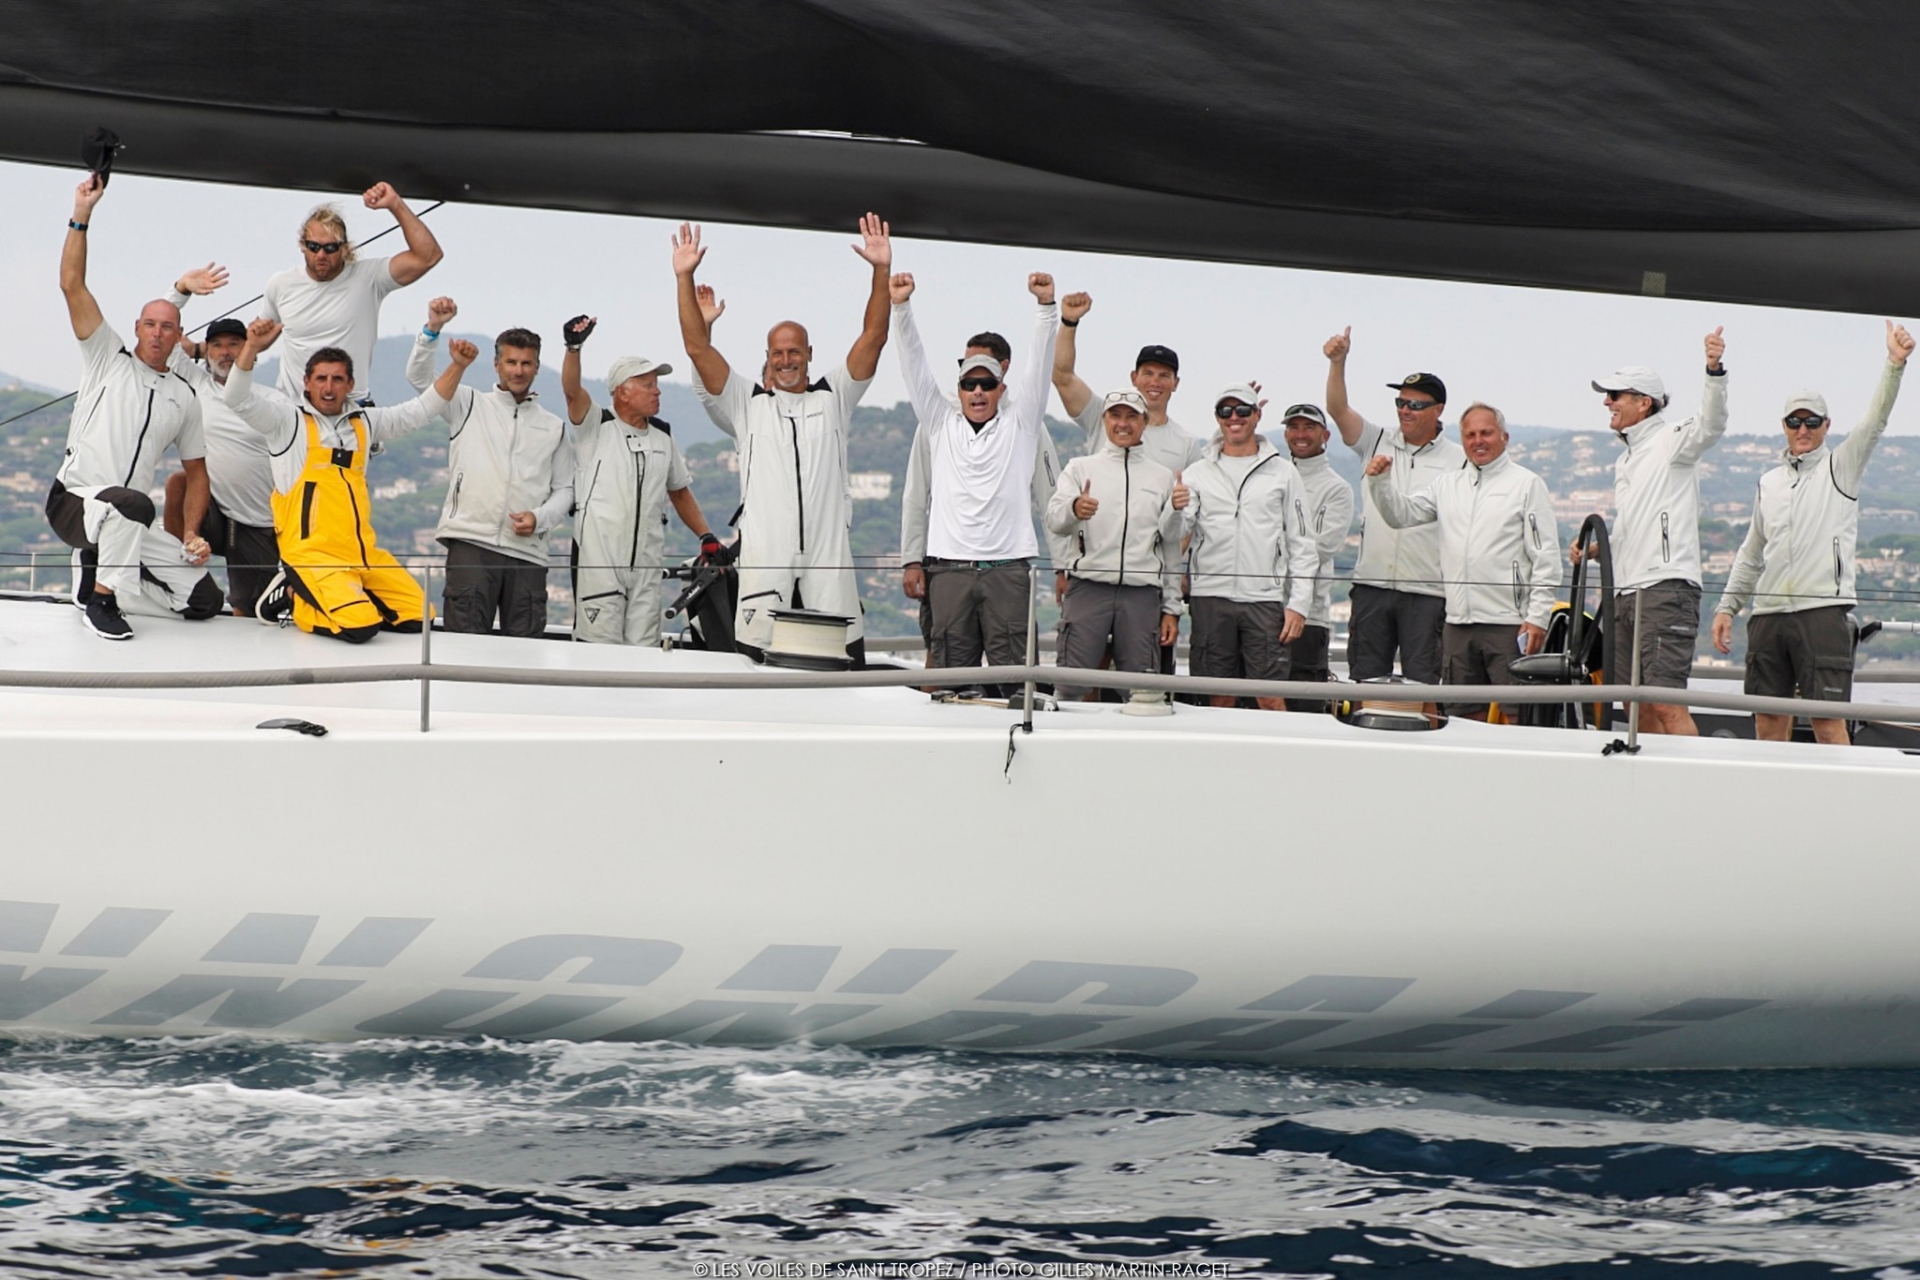 Les Voiles de Saint-Tropez: Cannonball del socio YCCS Dario Ferrari vince tra i Maxi 2 - NEWS - Yacht Club Costa Smeralda